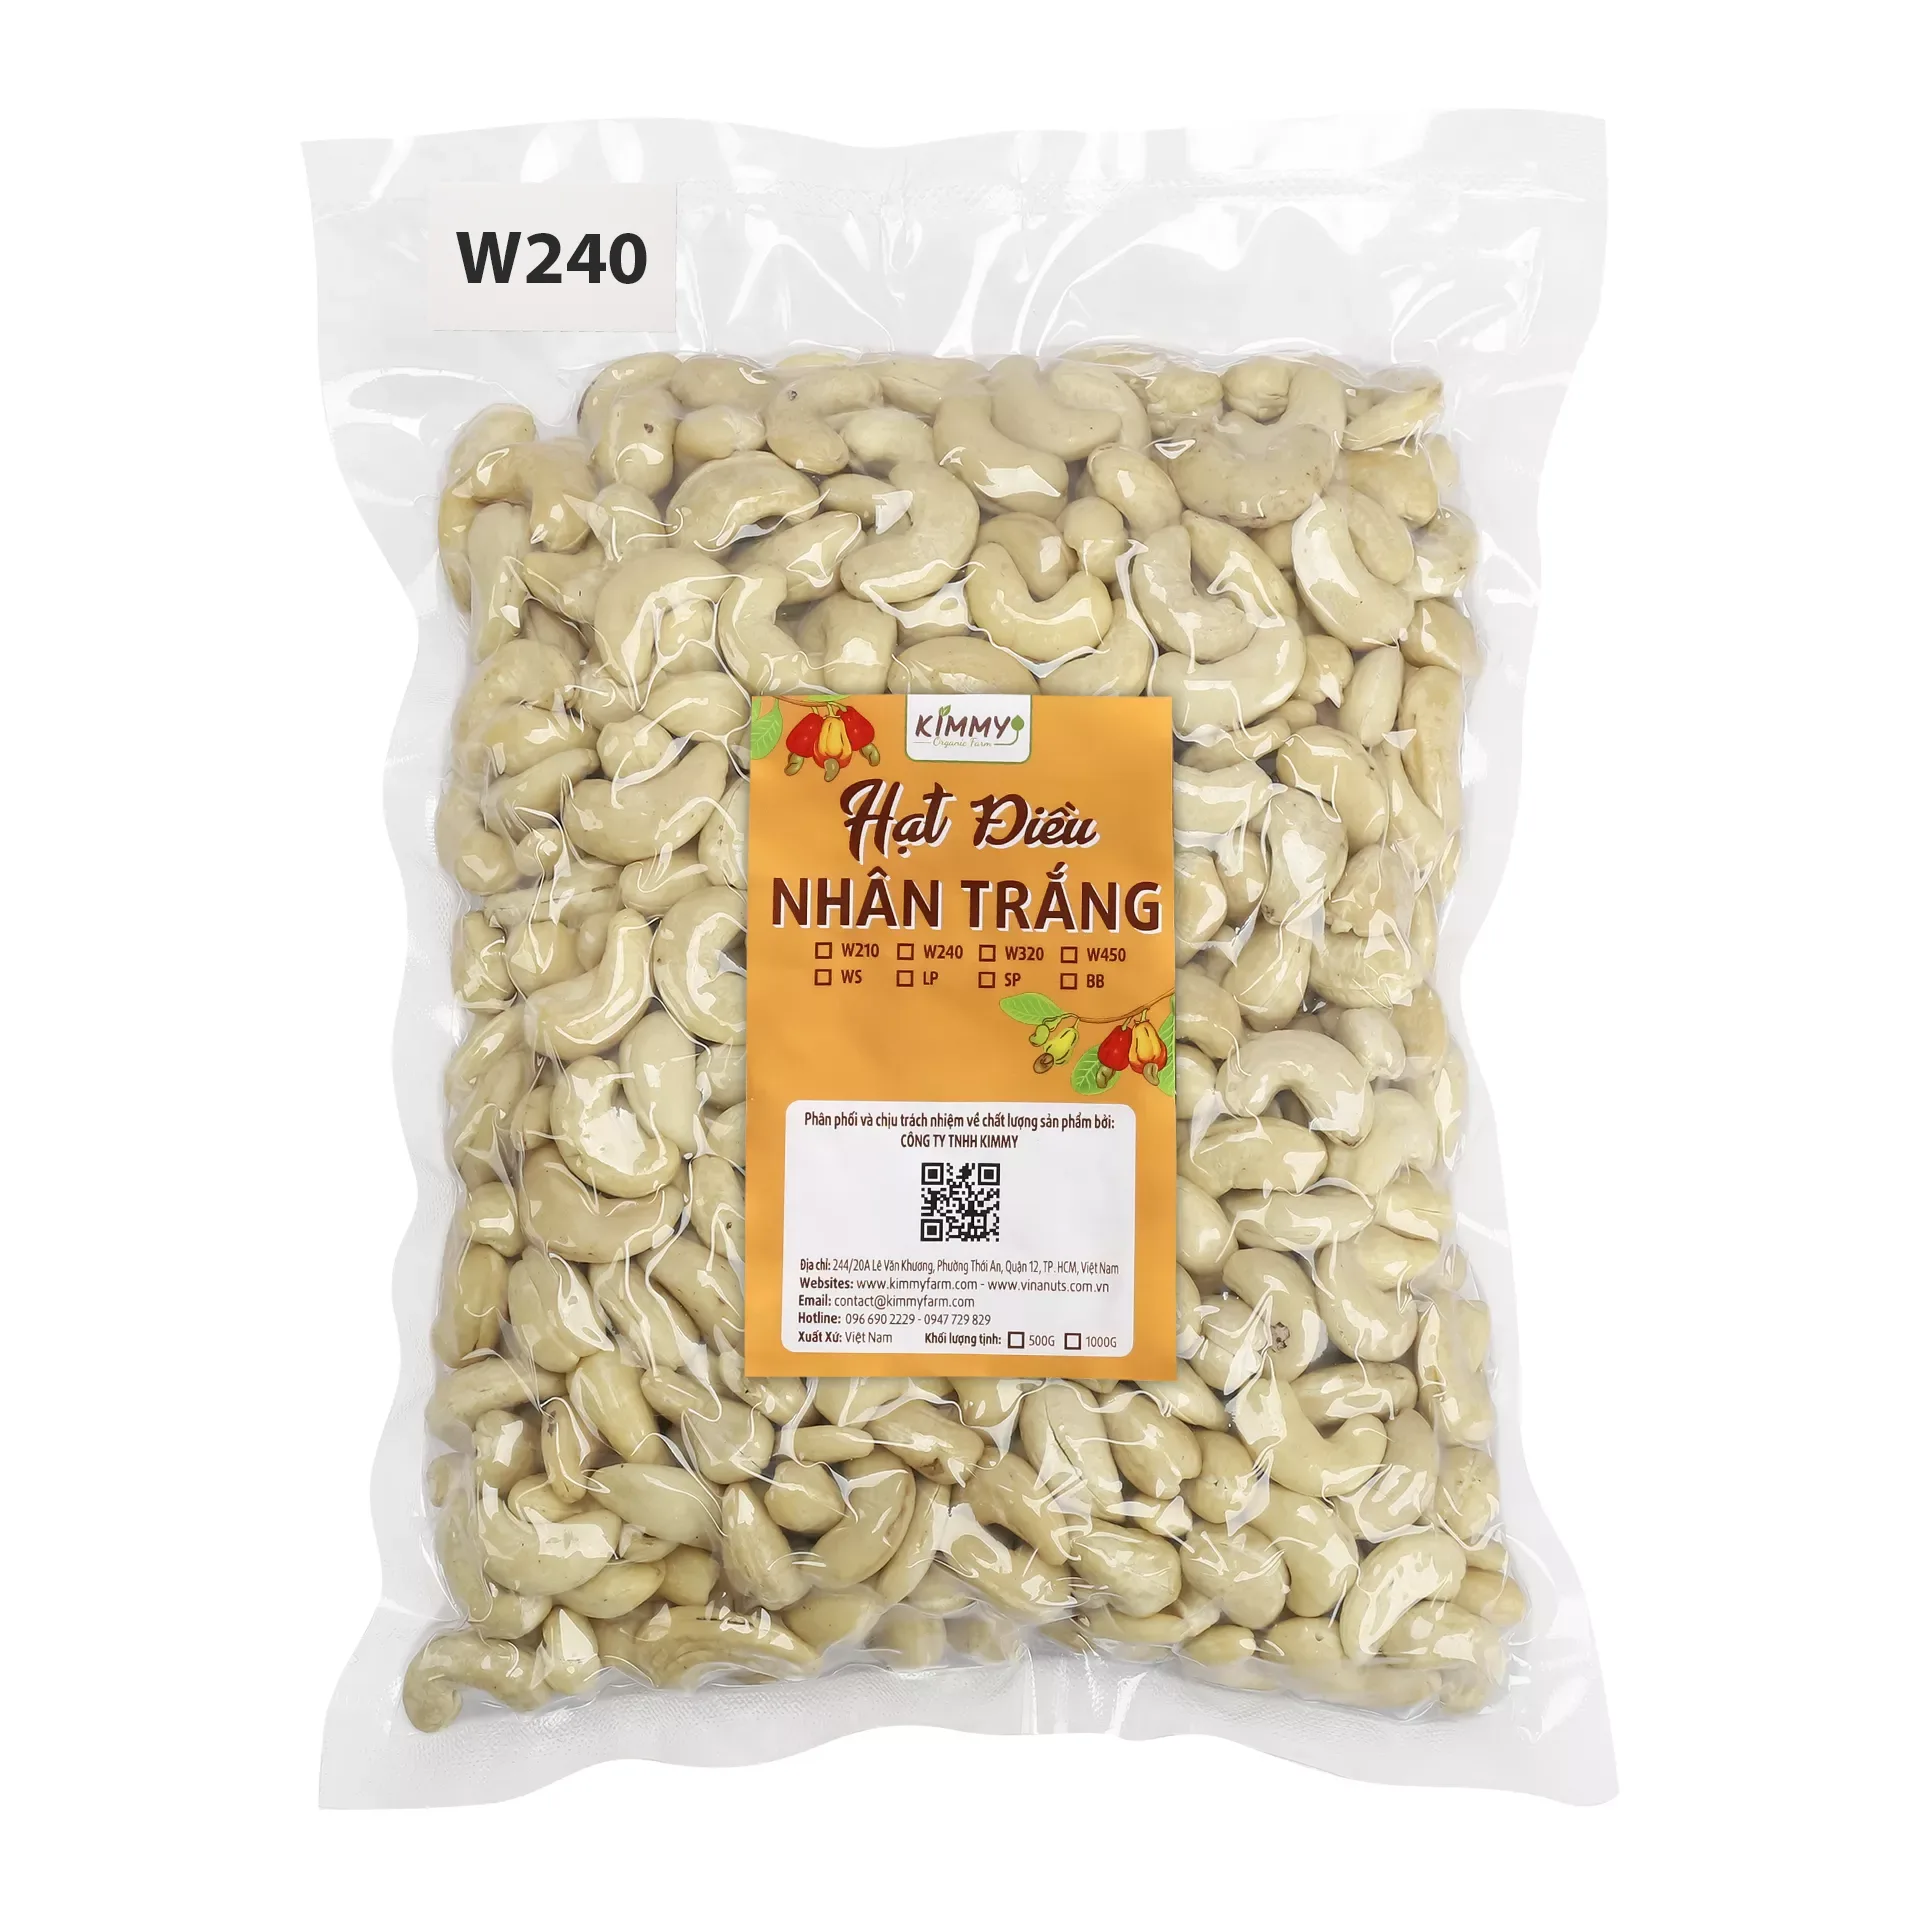 W240 Cashew Nuts 1st Quality (AFI Standard) Packed in Vaccum Bag 1KG - Kimmy Farm Vietnam